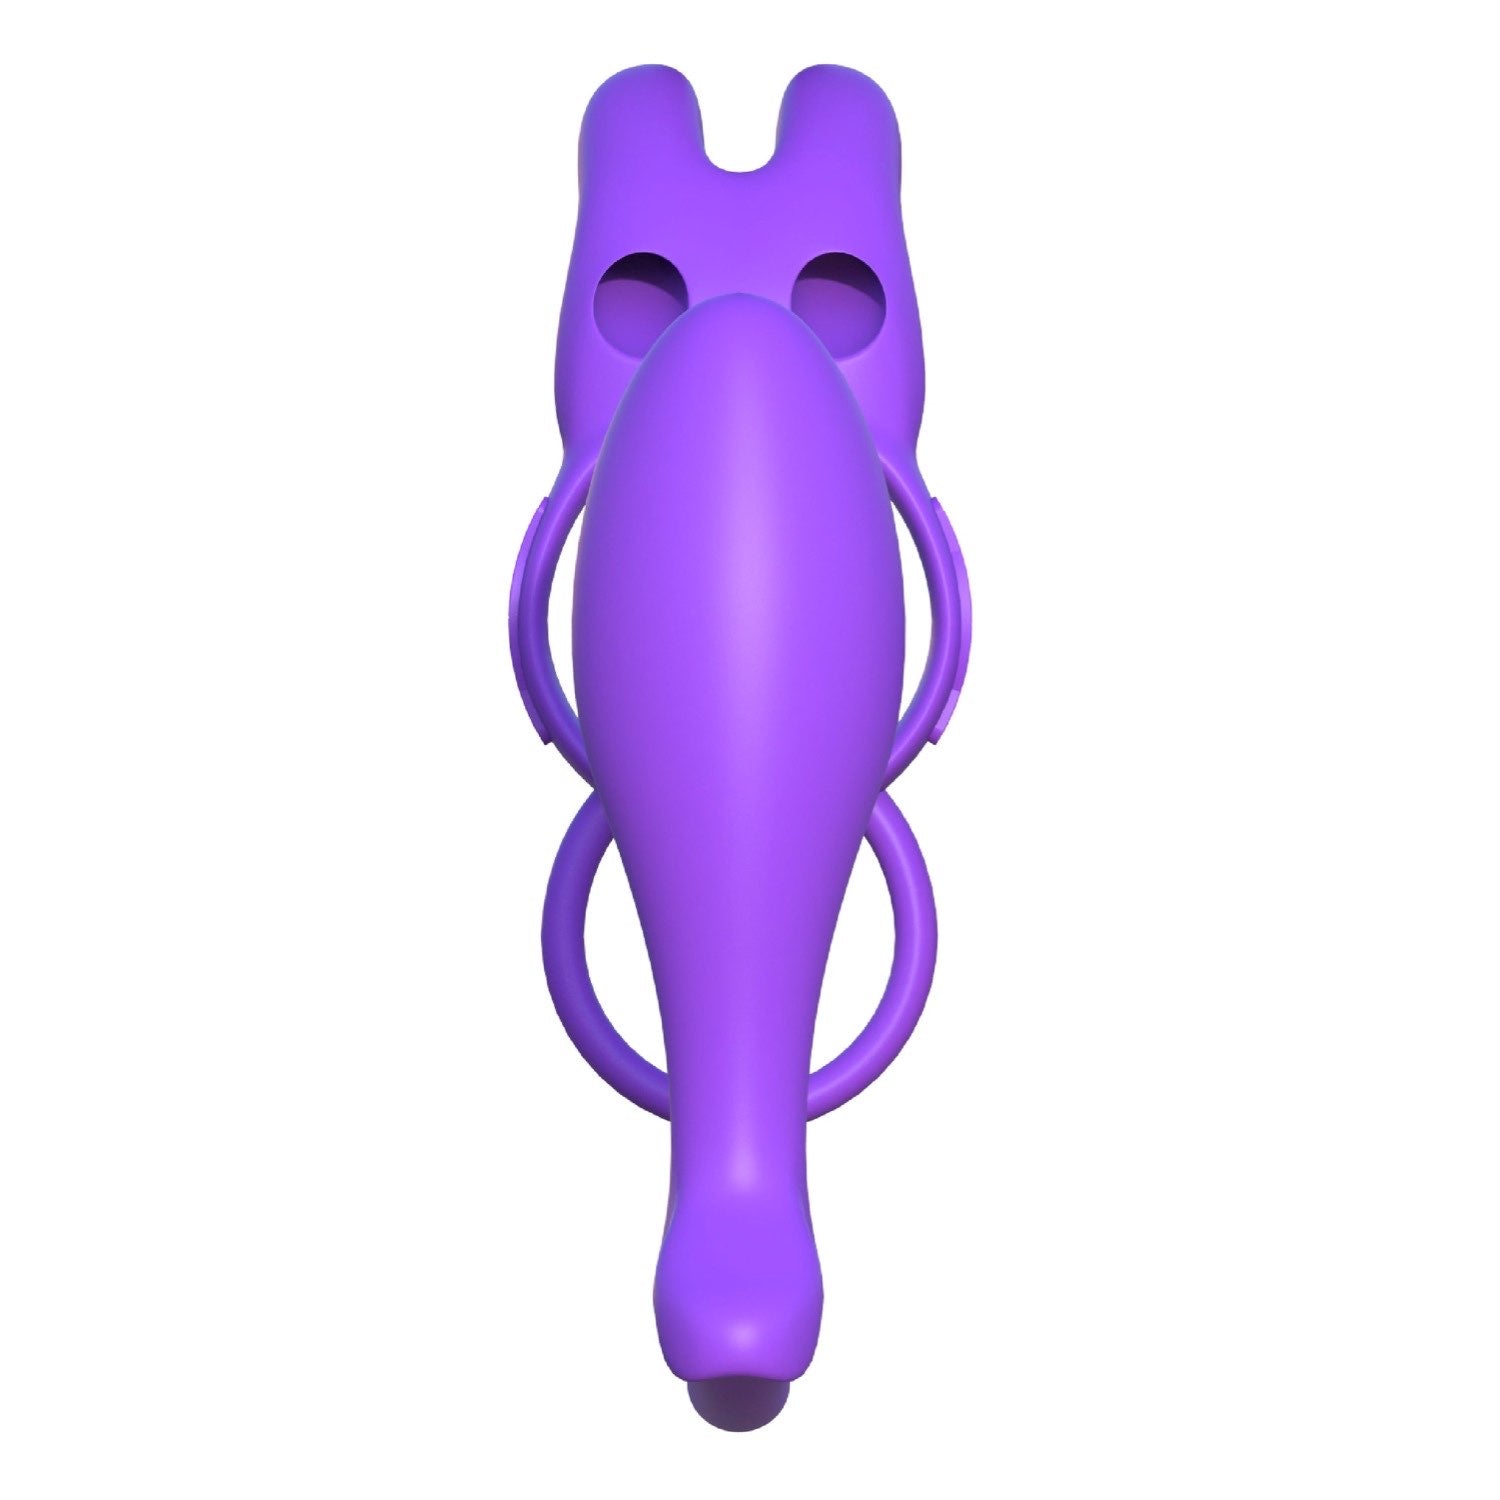 幻想C环 Fantasy C-ringz Ass-gasm Vibration Rabbit - 紫色振动公鸡环带肛门塞 by Pipedream